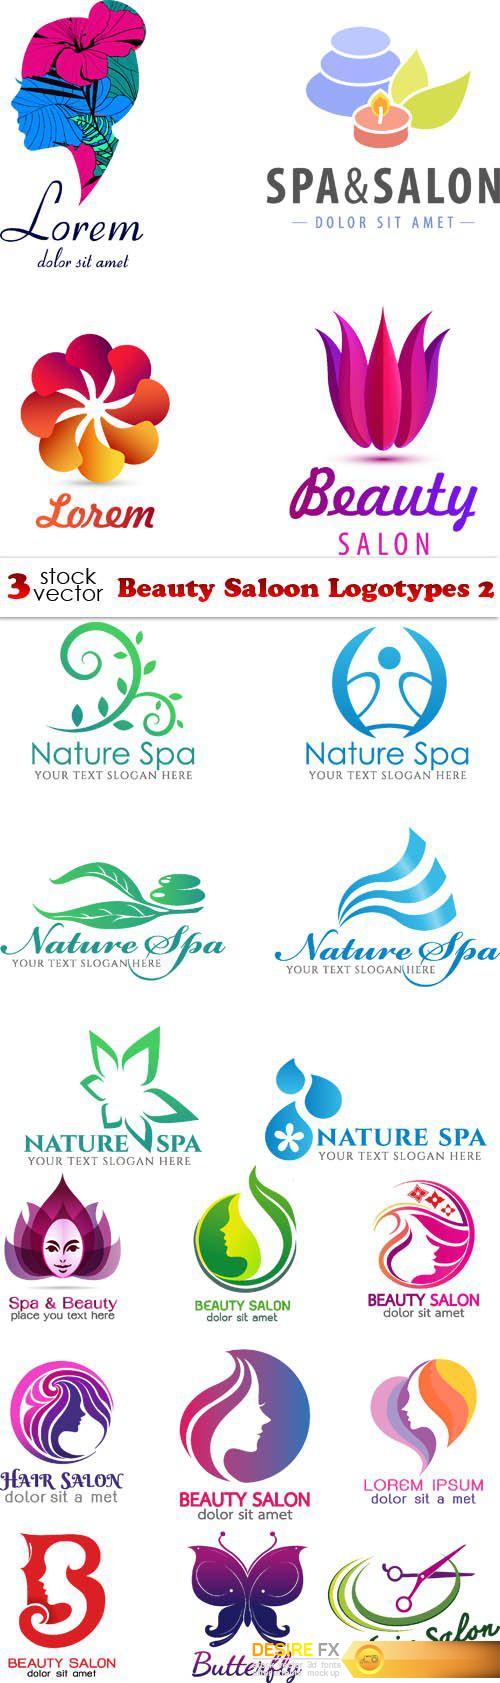 Vectors - Beauty Saloon Logotypes 2